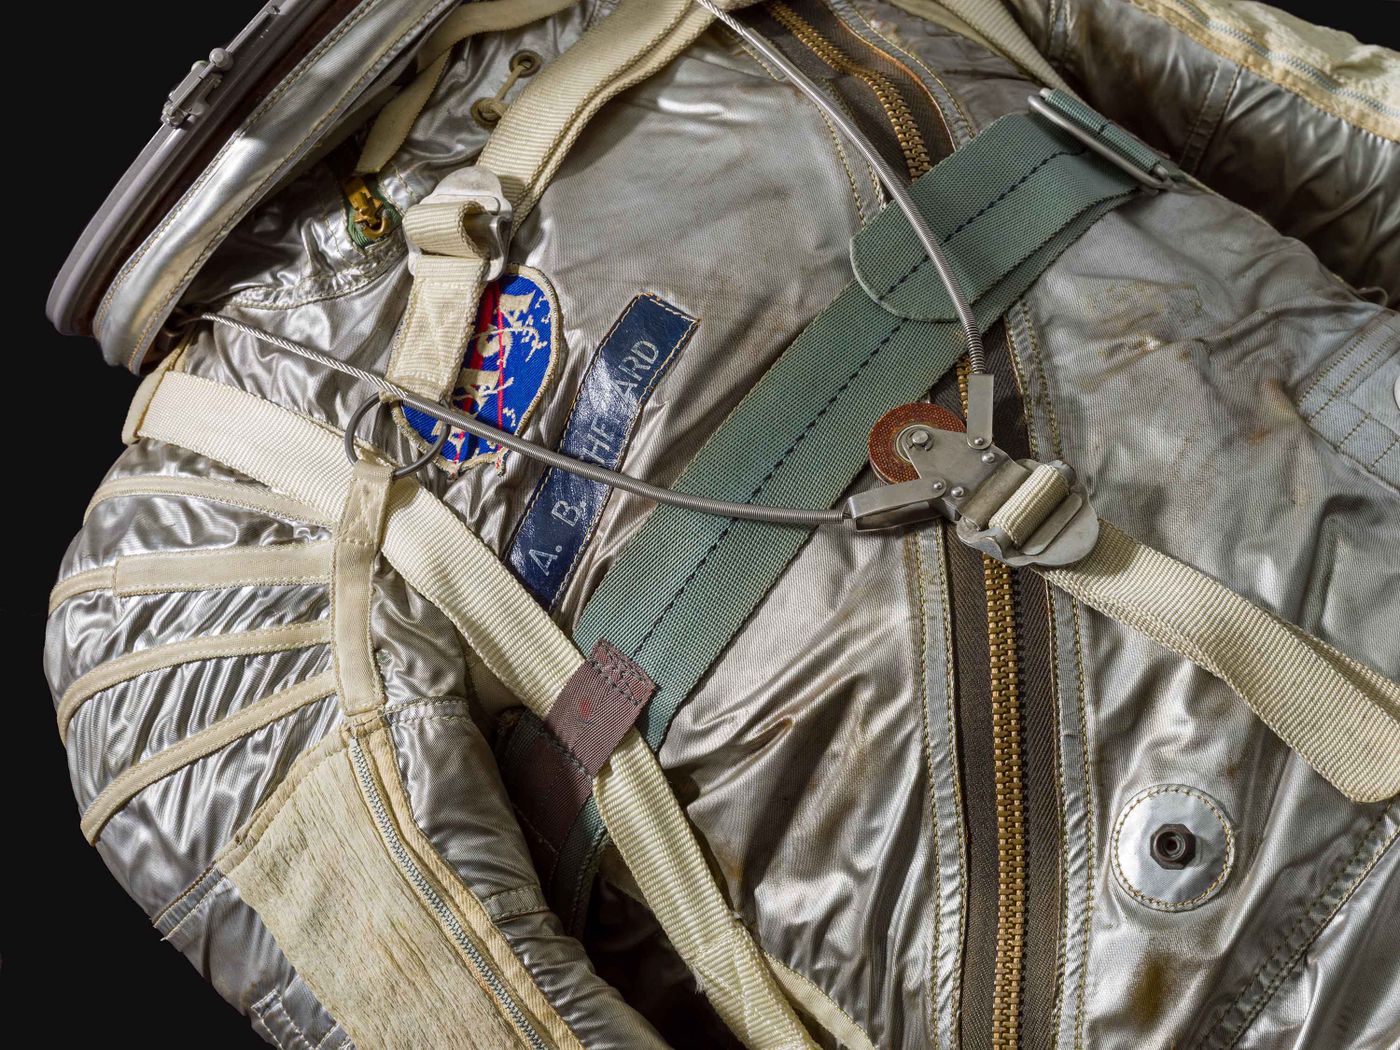 Alan Shepard's space suit